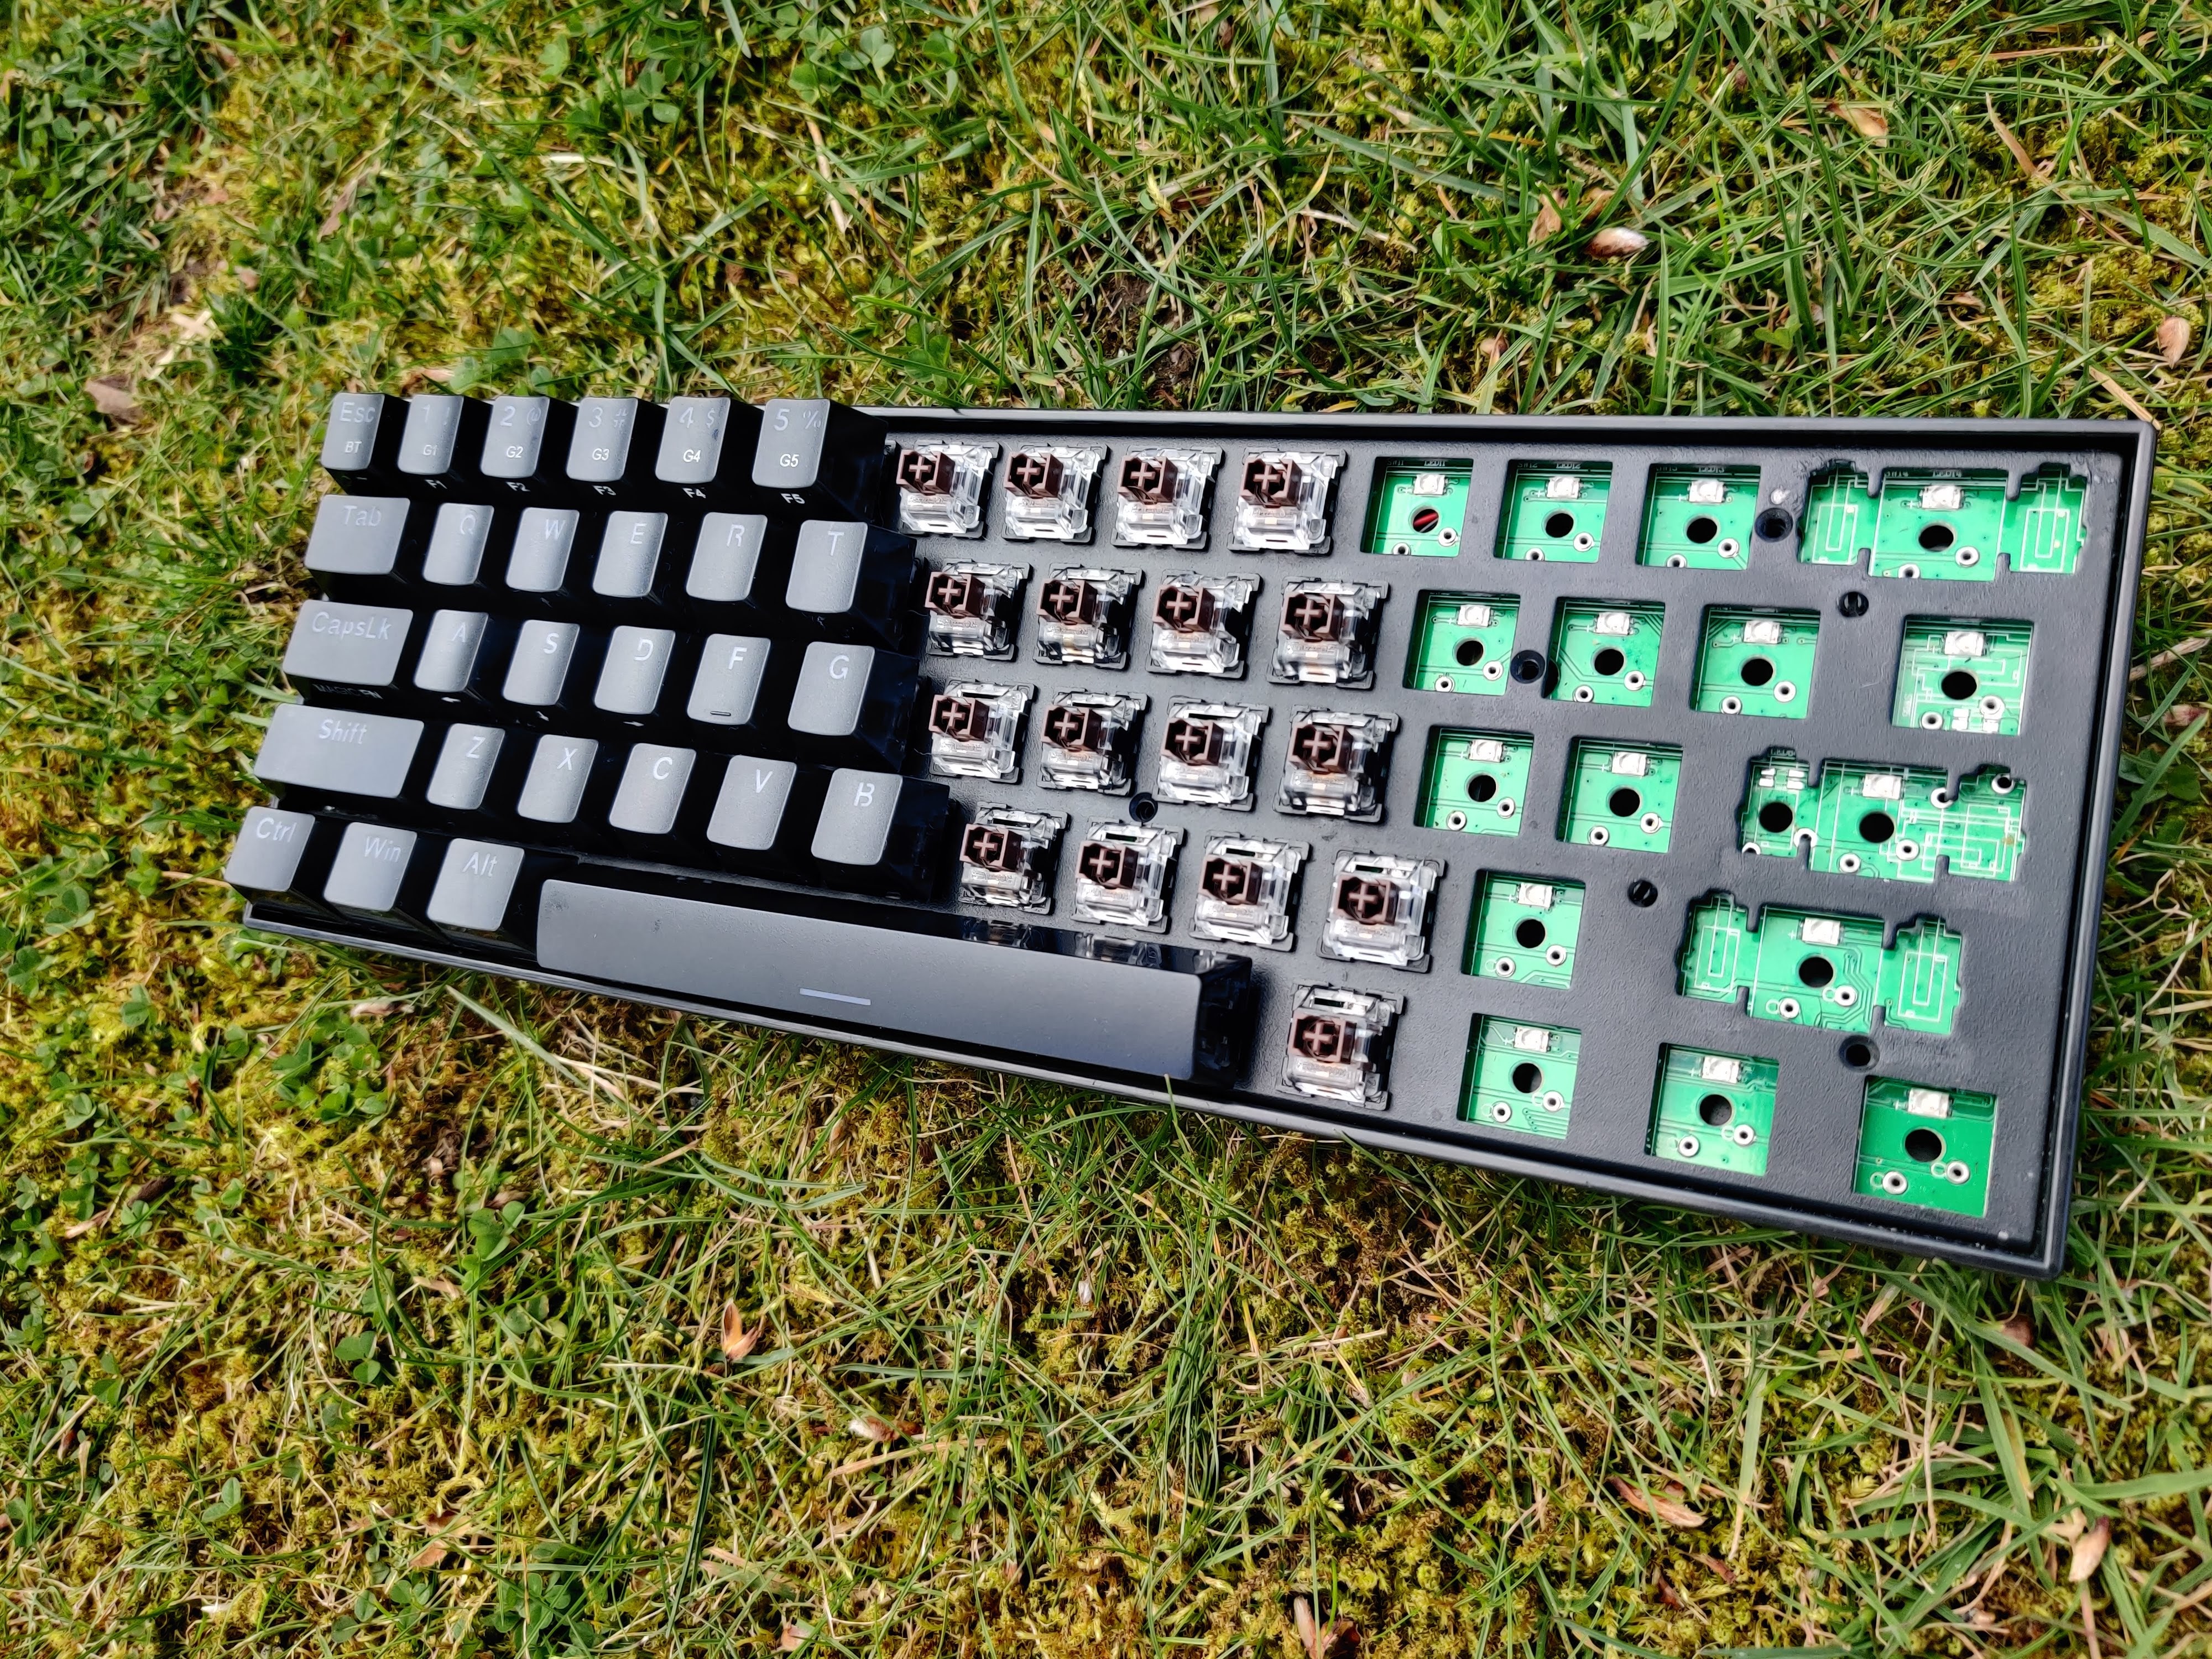 Redrapon K530 mechanical keyboard on grass